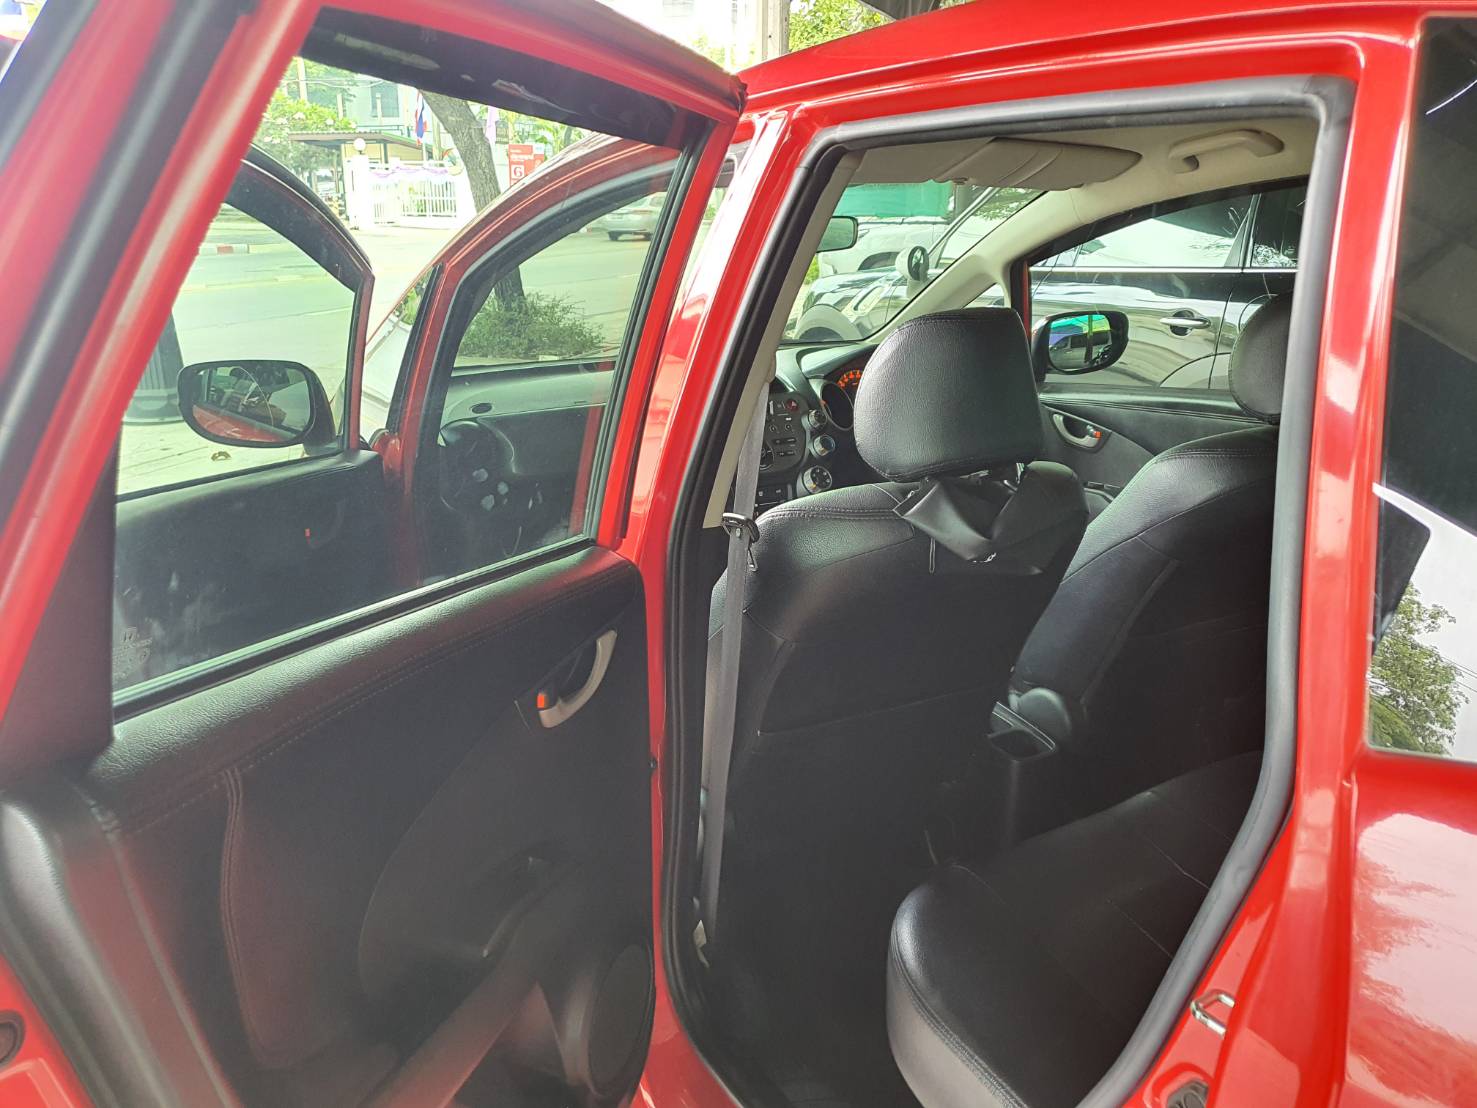 Honda Jazz 1.5V Auto ปี 2013 สีแดง รถมือ1 เช็คศูนย์